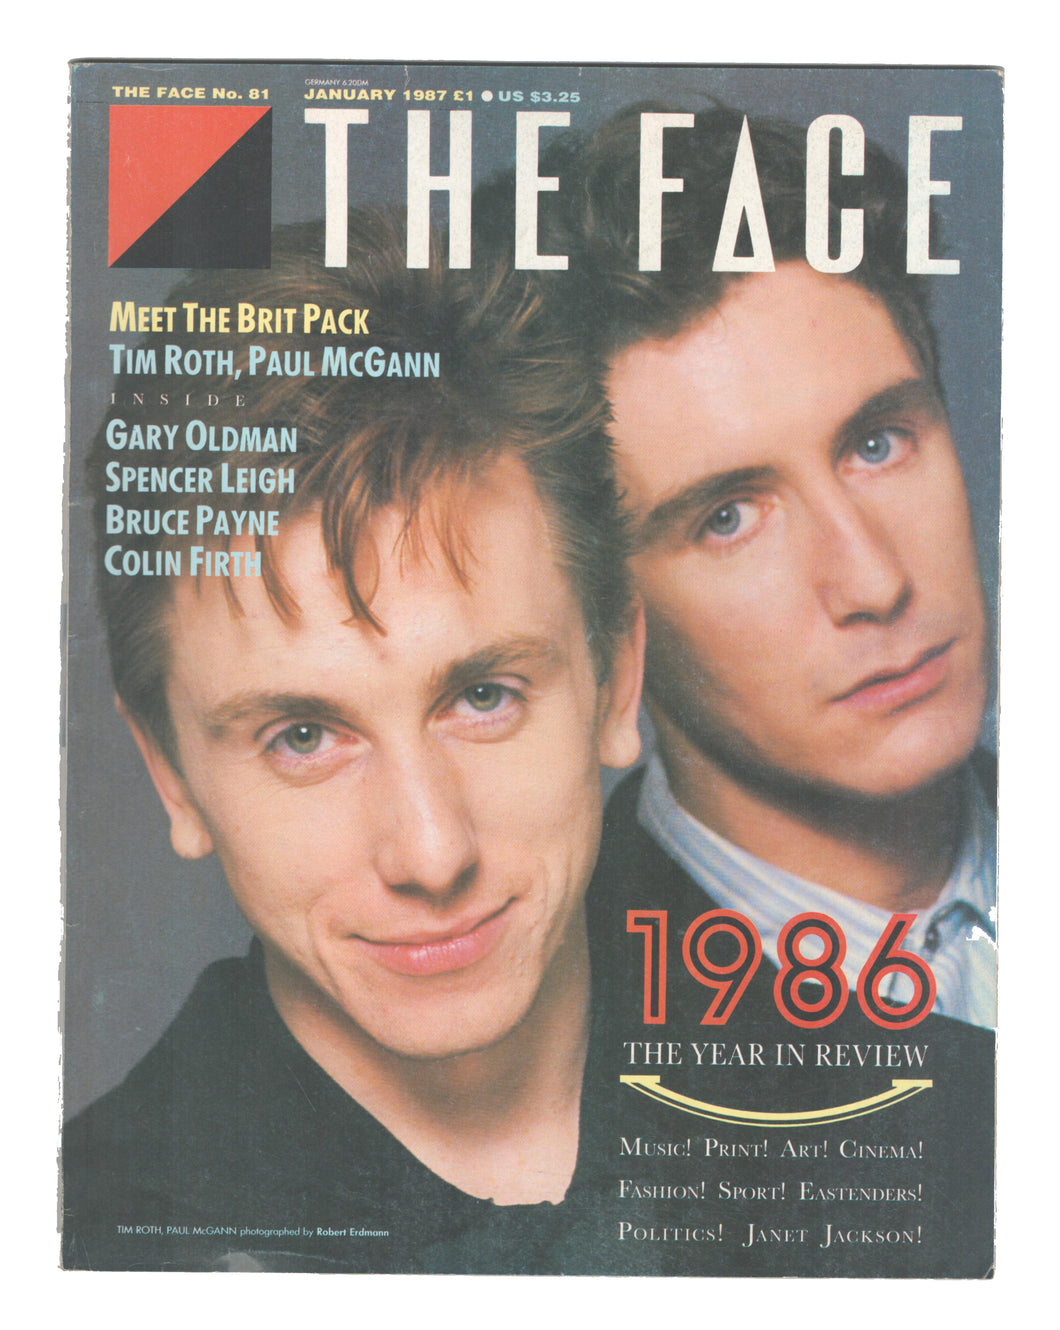 The Face No 81 Jan 1987